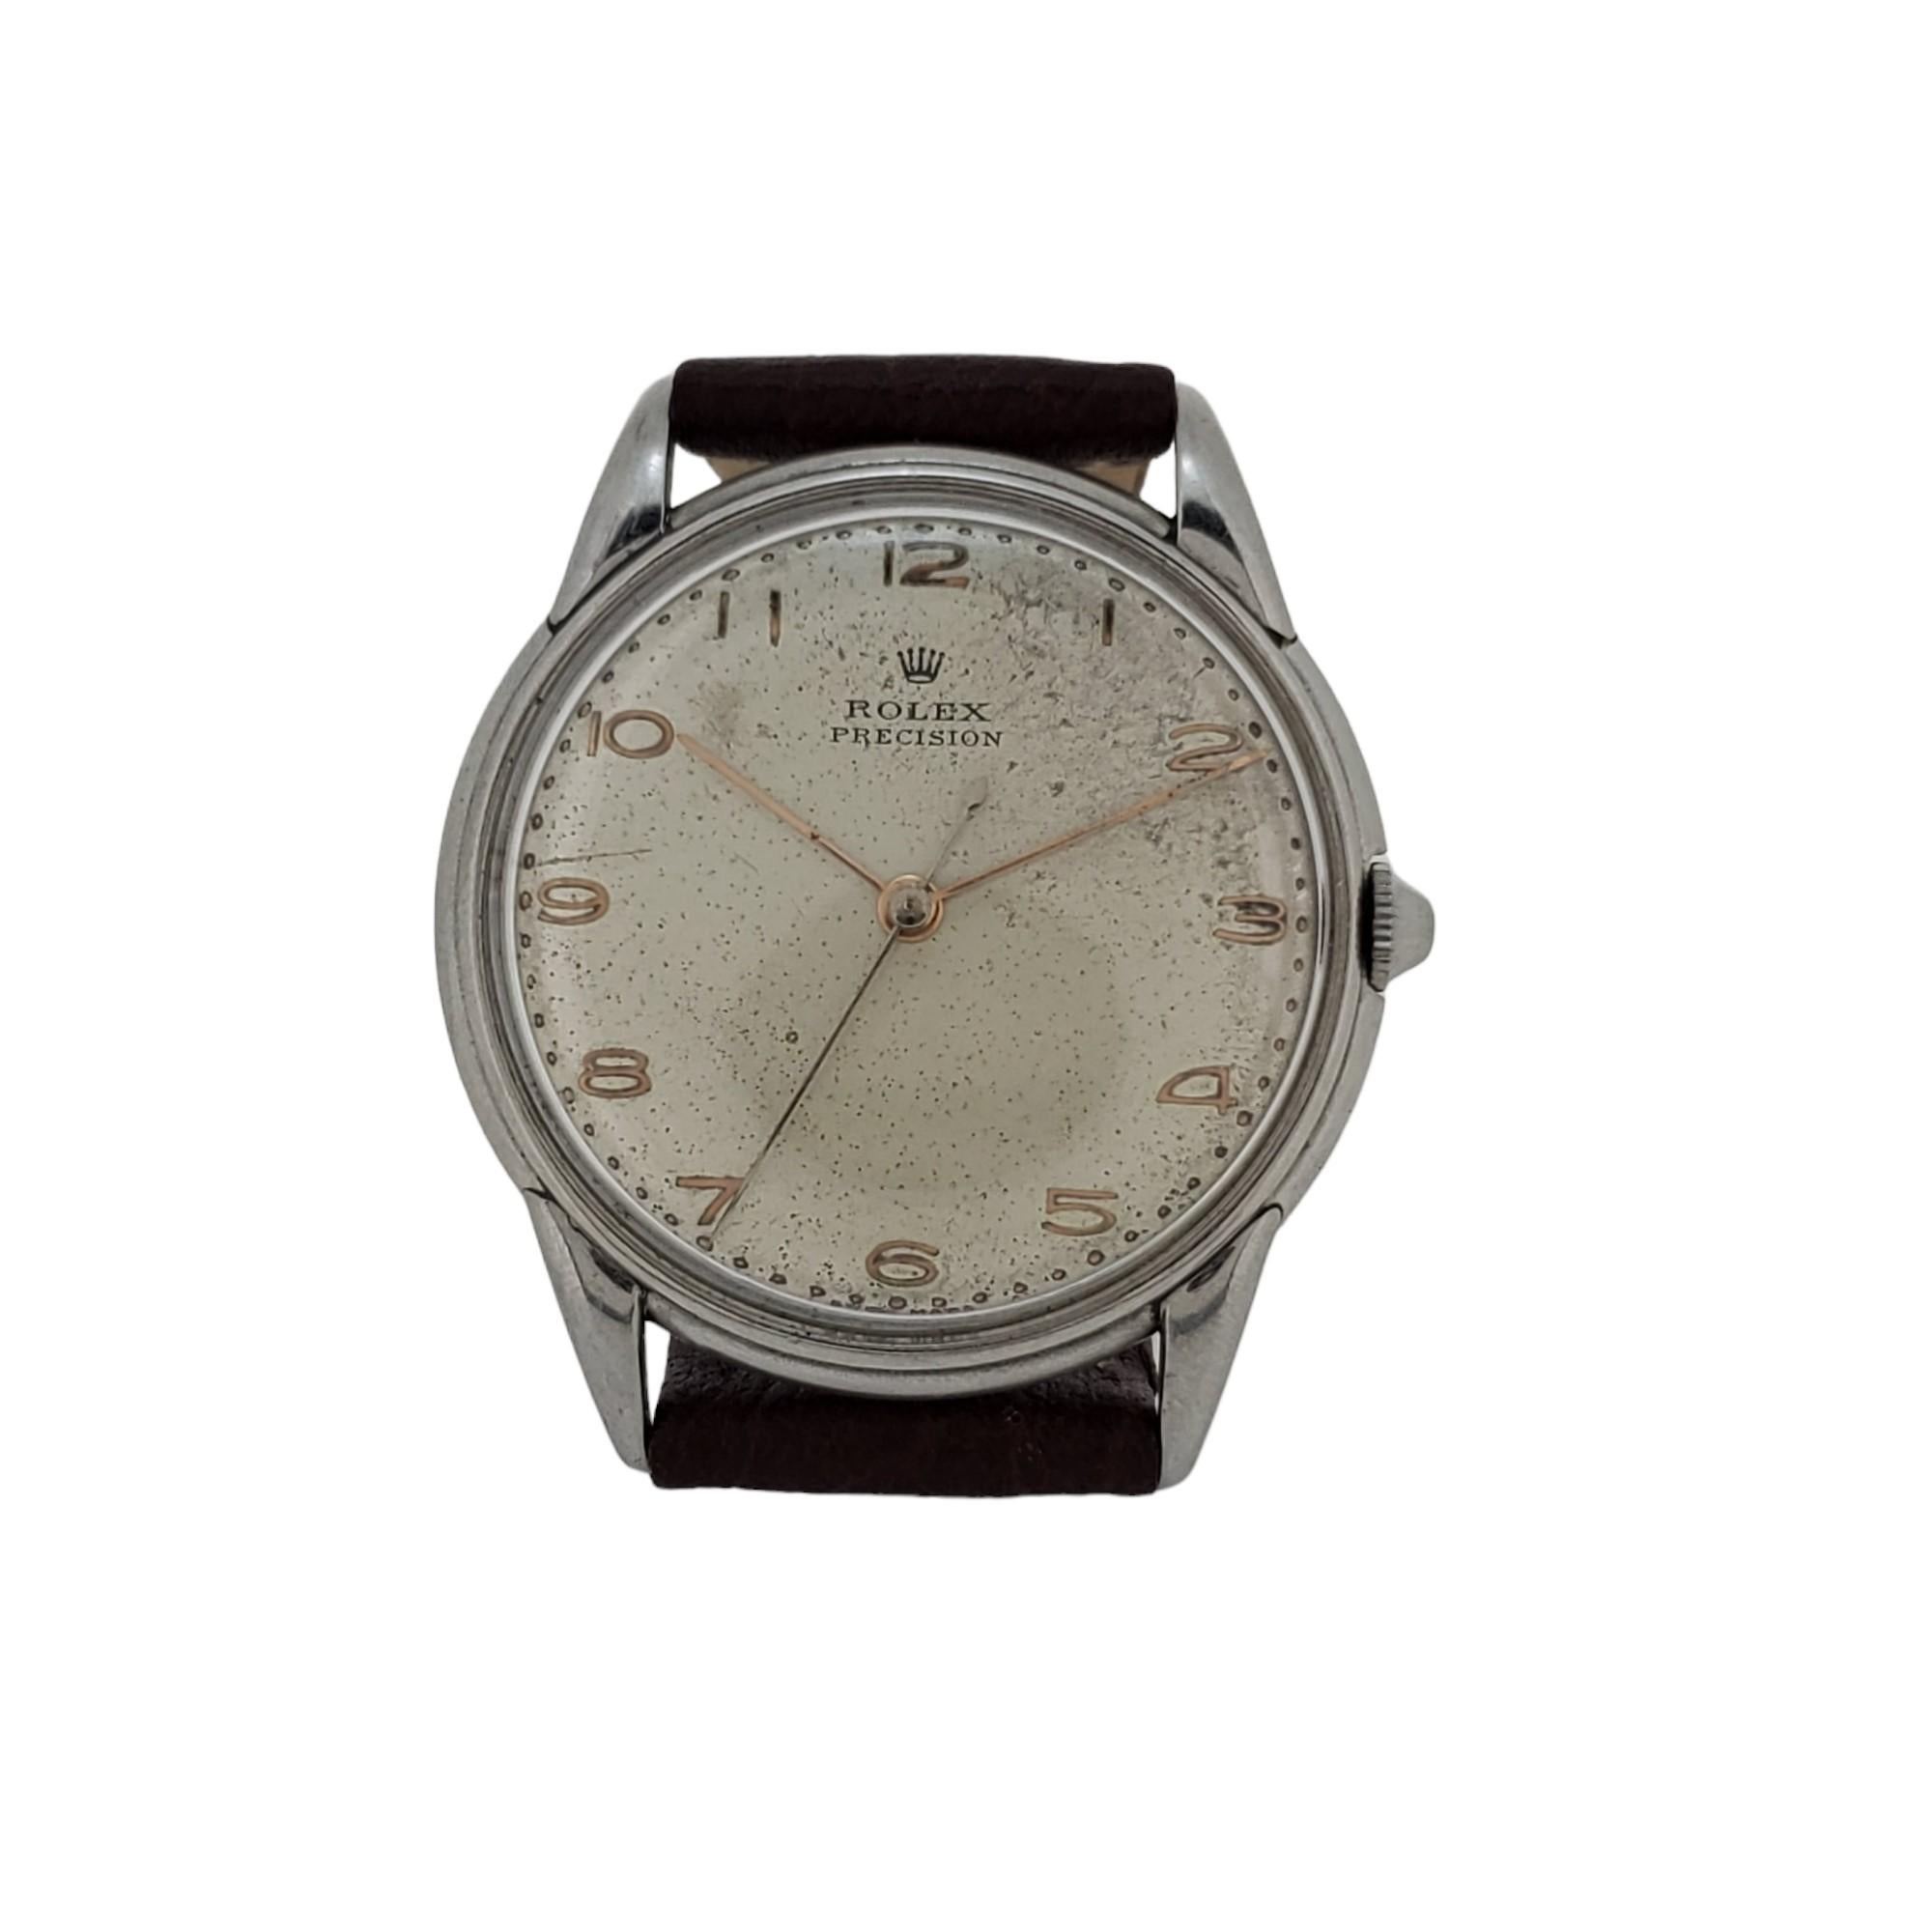 Rolex Precision 4219 stainless steel watch, Circa 1950's  All original 3